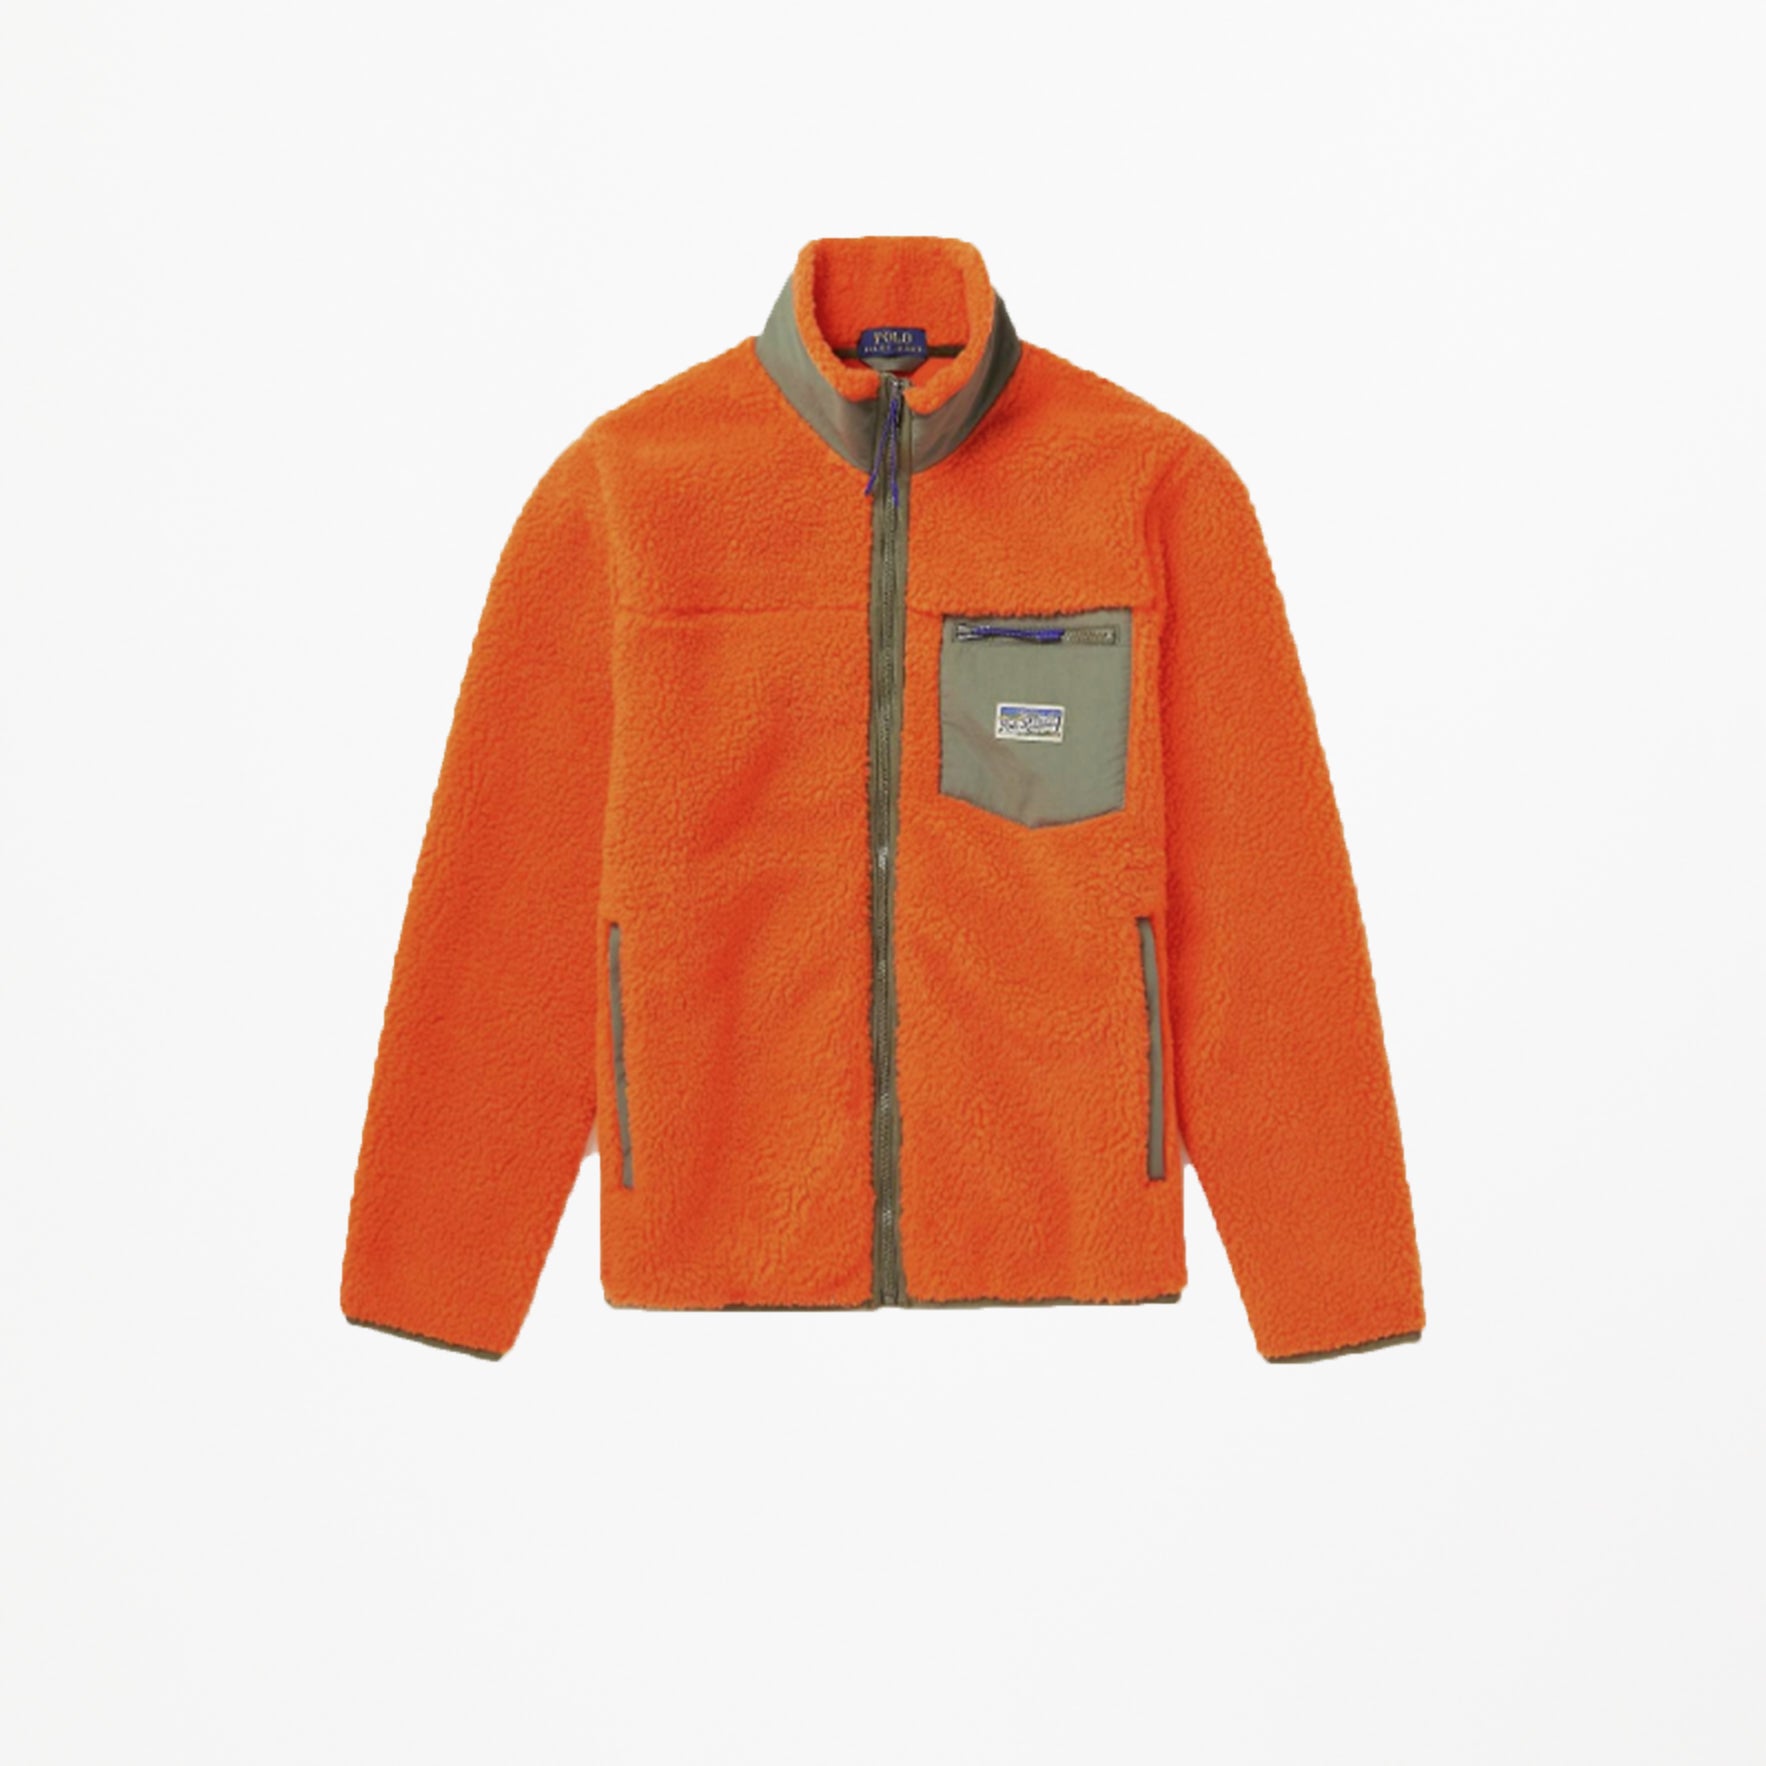 Gilet Polo Ralph Lauren Sherpa Orange